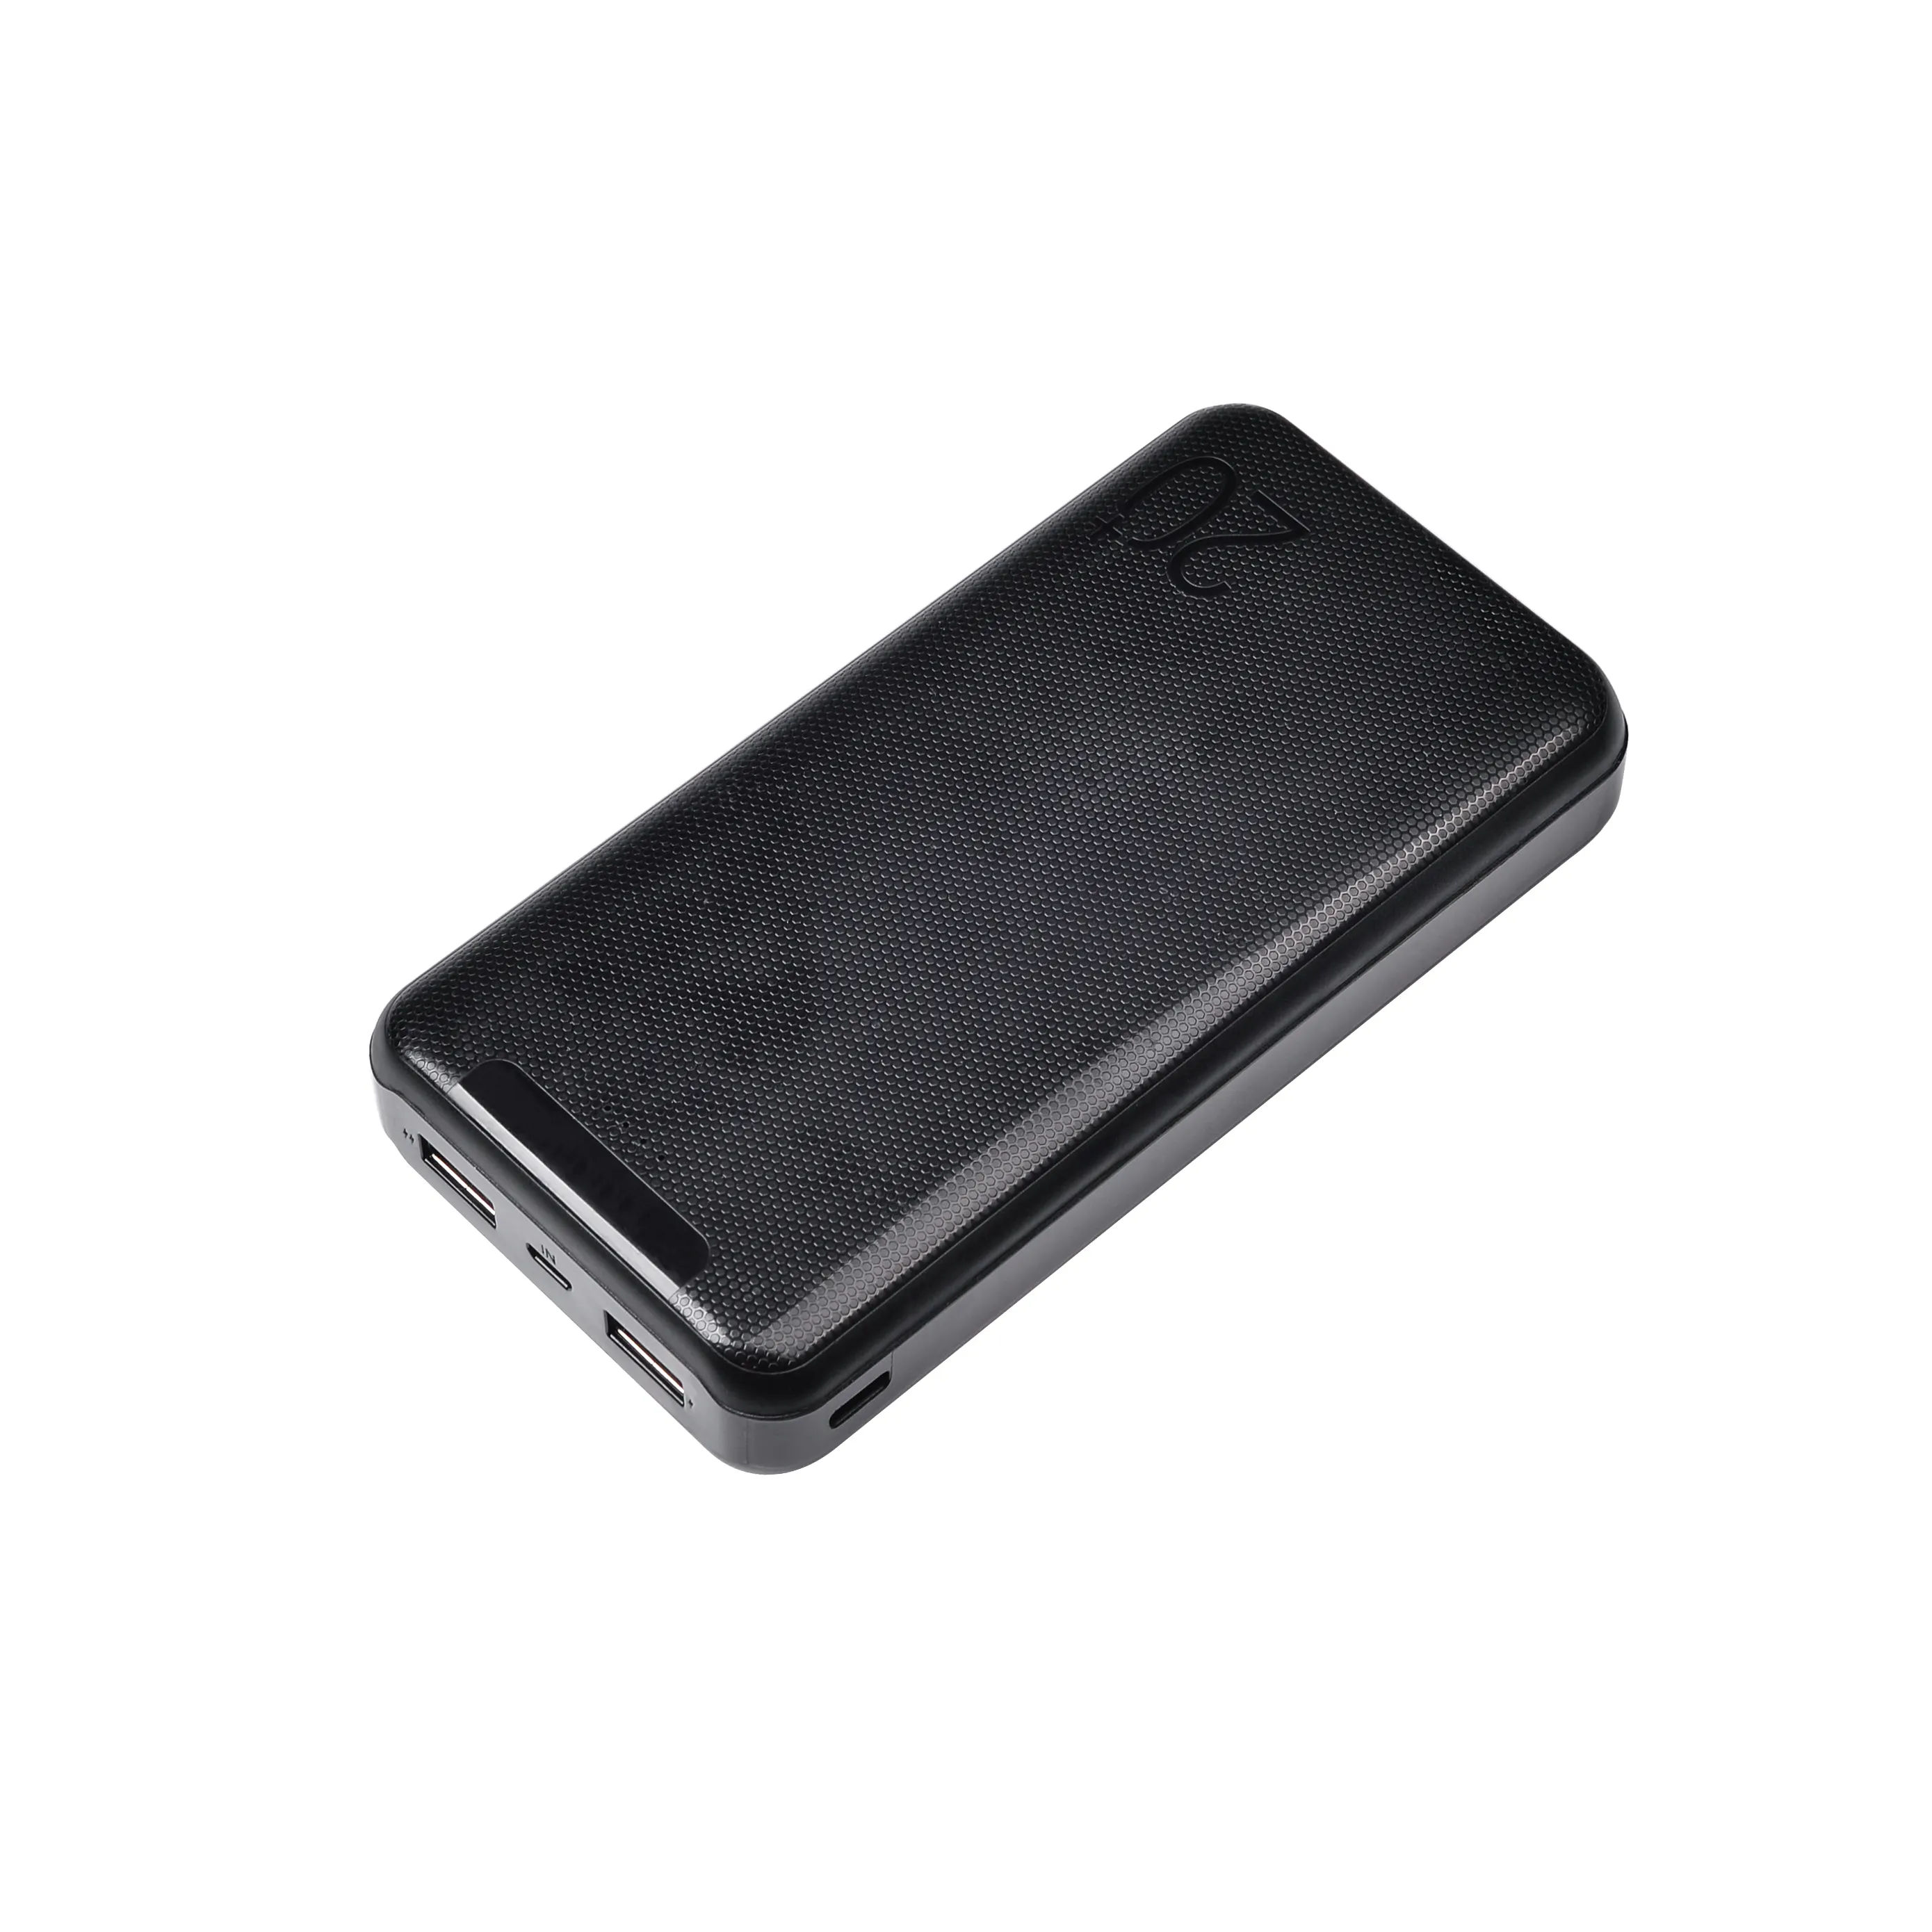 2 USB Mobile Power Bank 20000mAh powerbank portable charger external Battery 20000 mAH mobile phone charger Backup powers